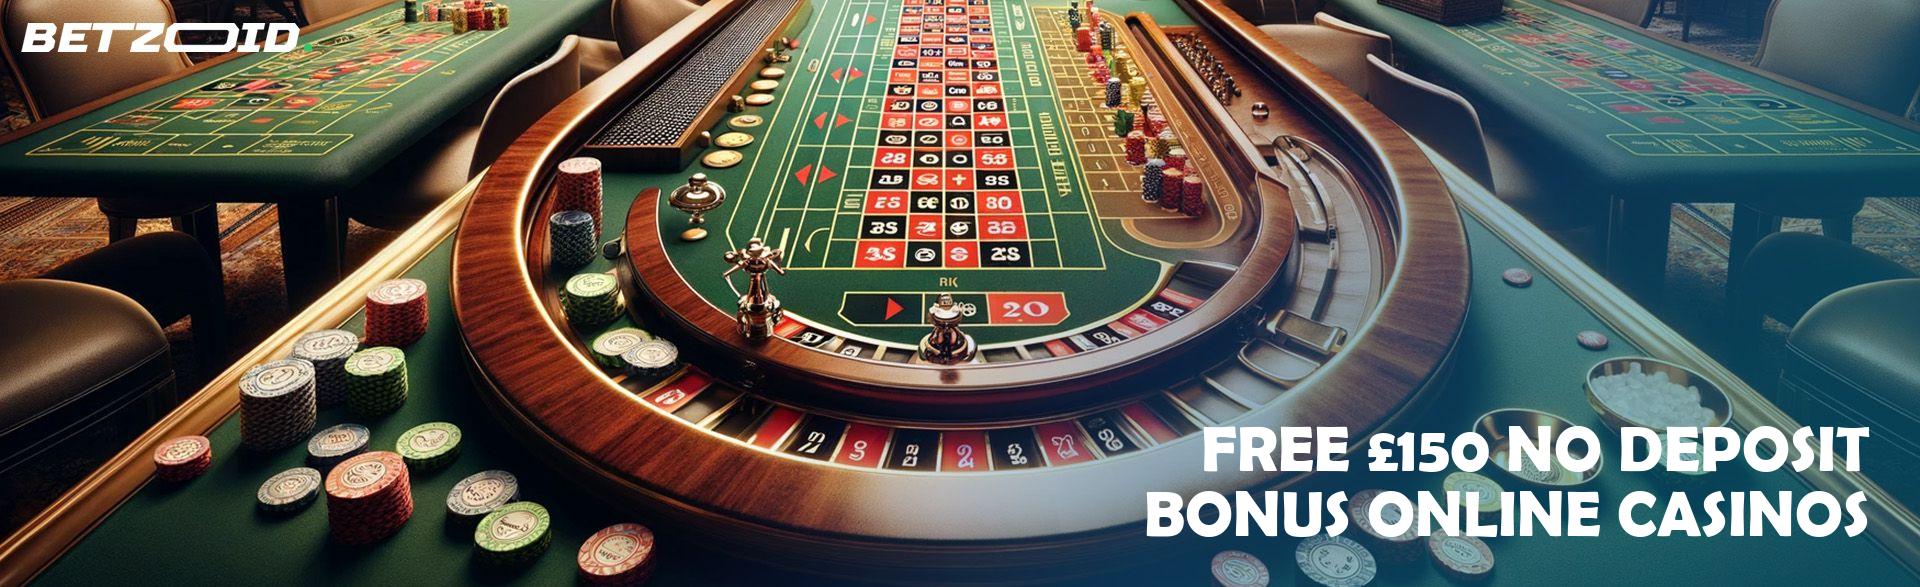 Free £150 No Deposit Bonus Online Casinos.